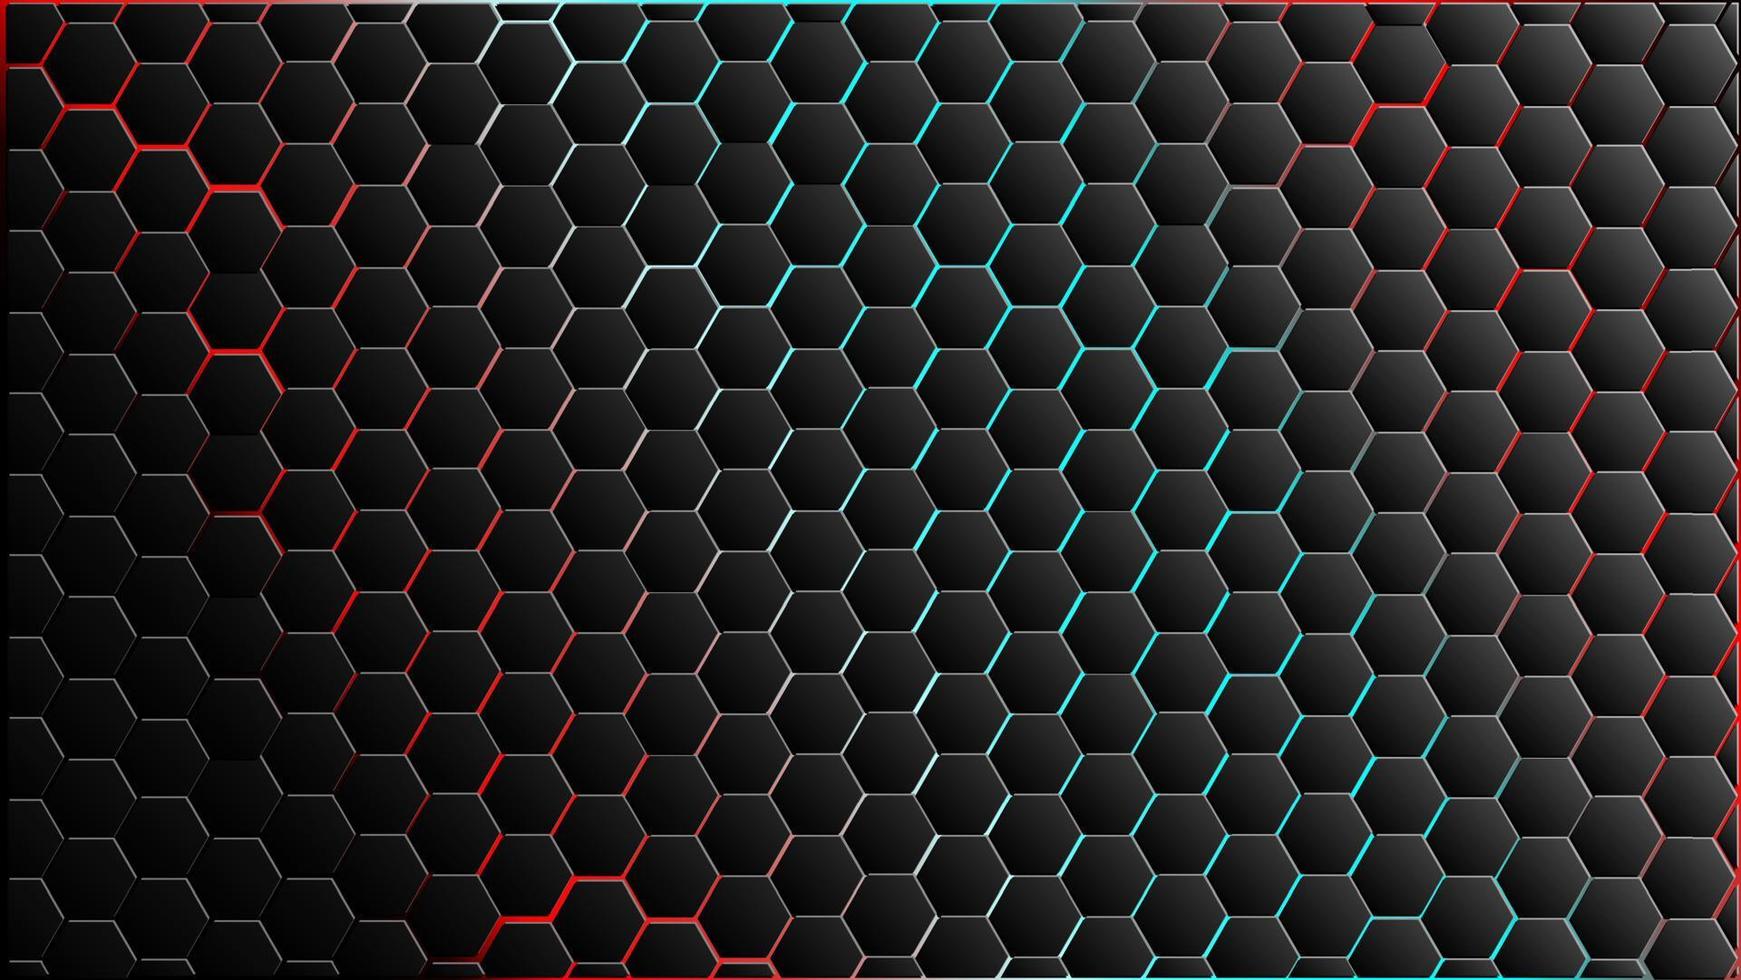 Hexagonal shape elements on glowing background vector